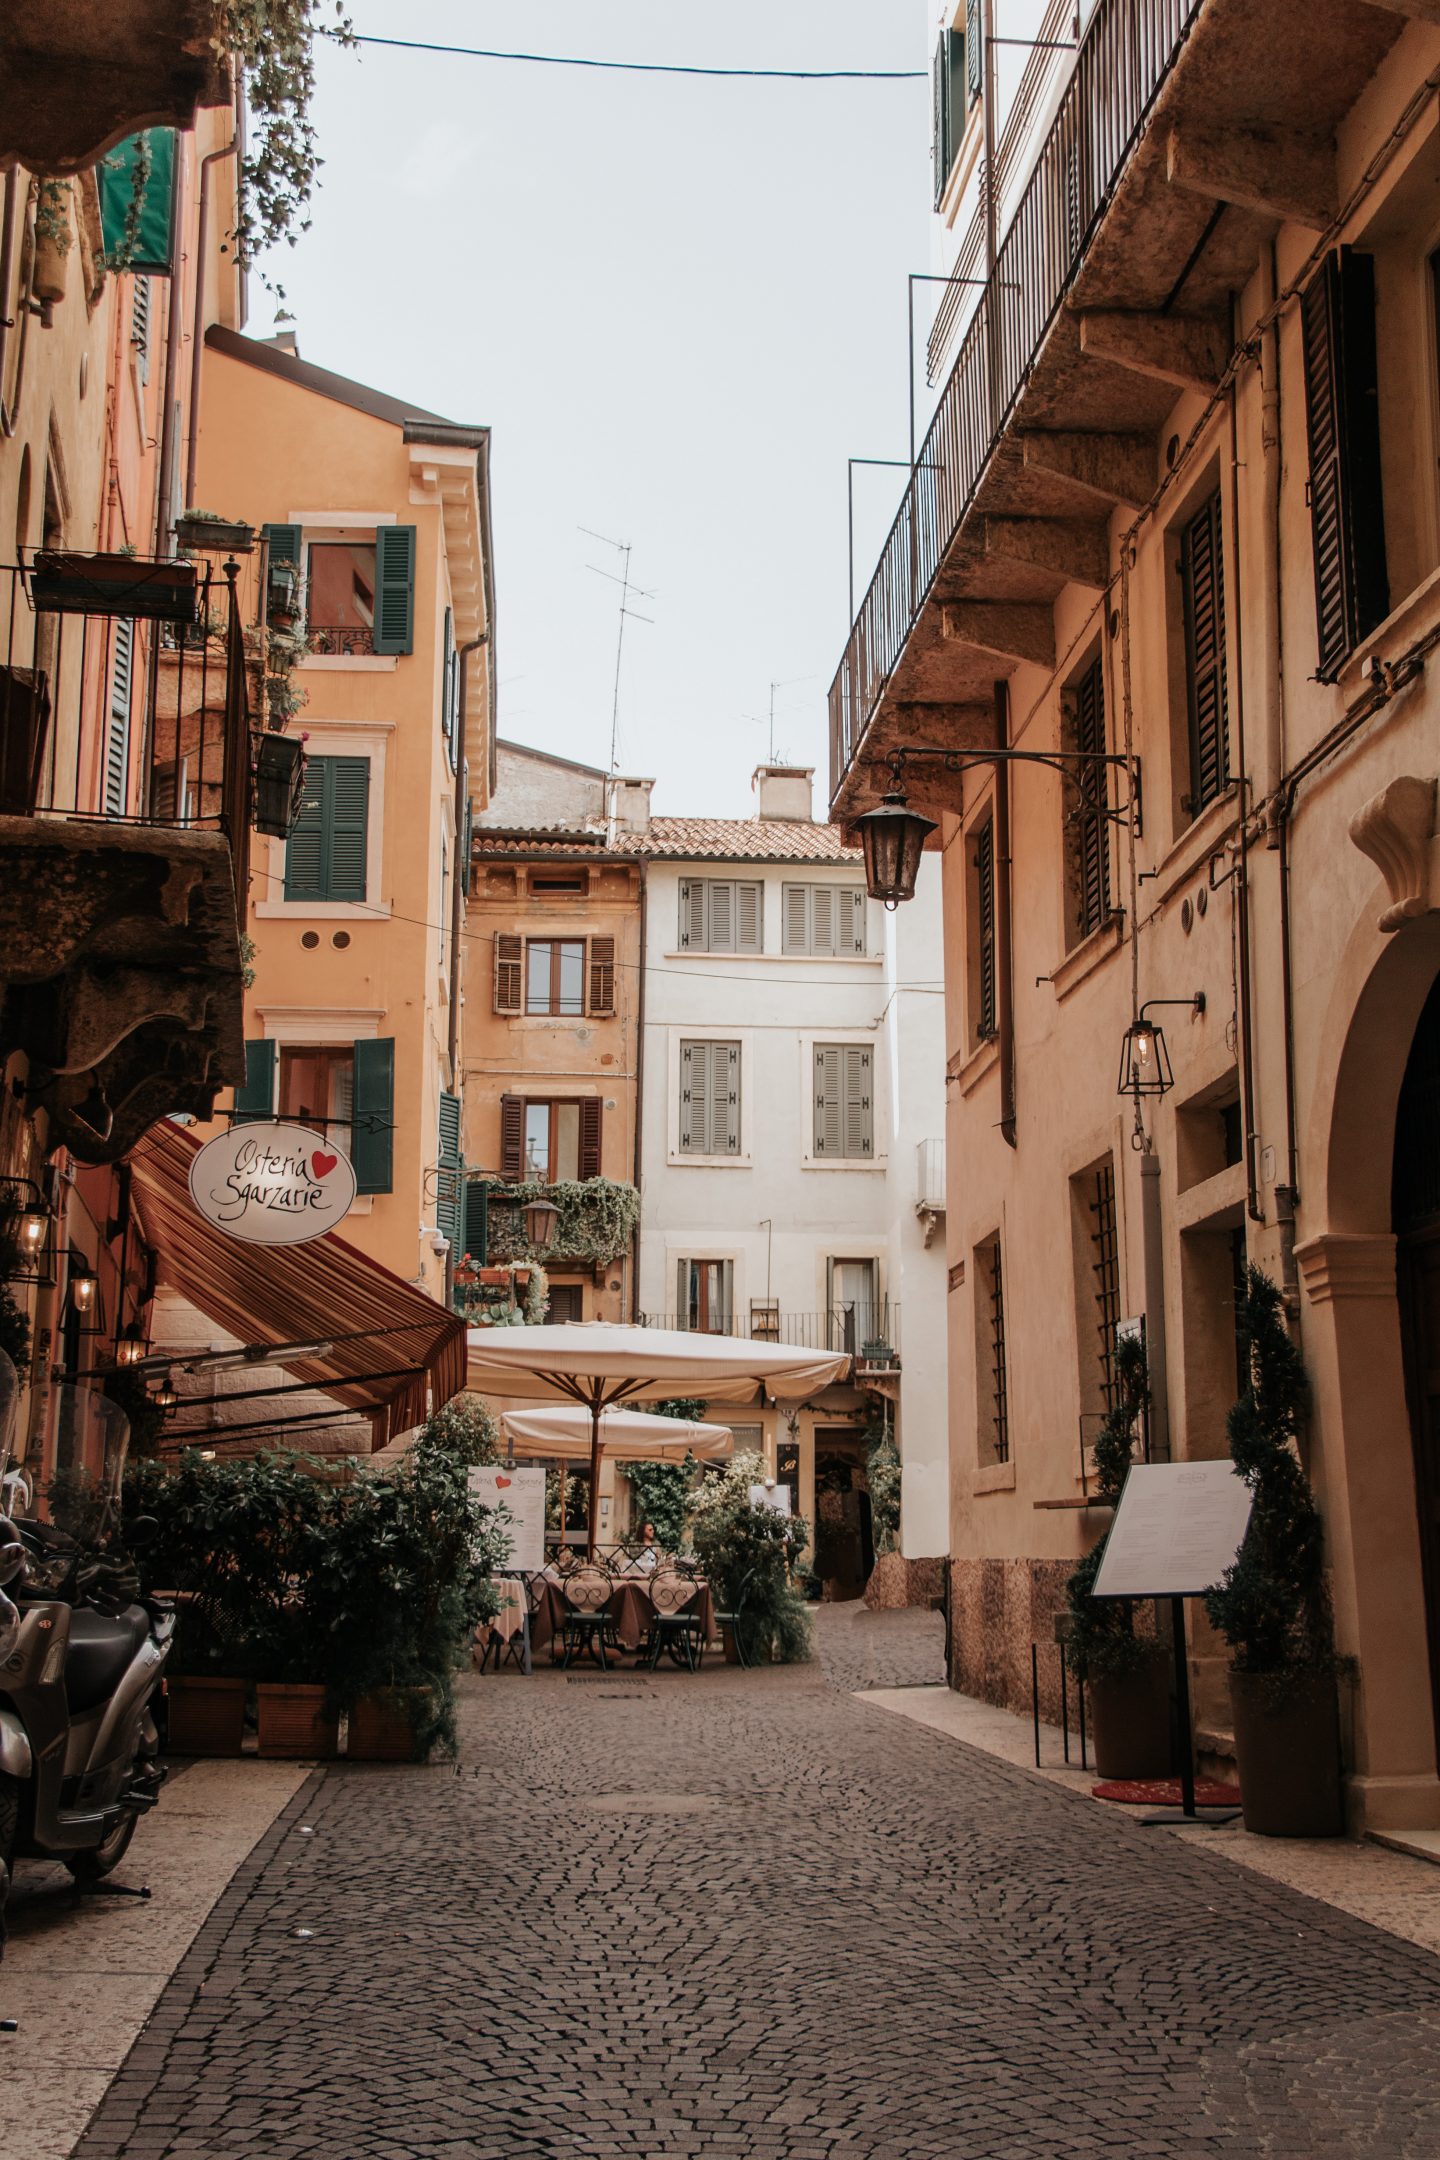 Small side street in Verona Italy